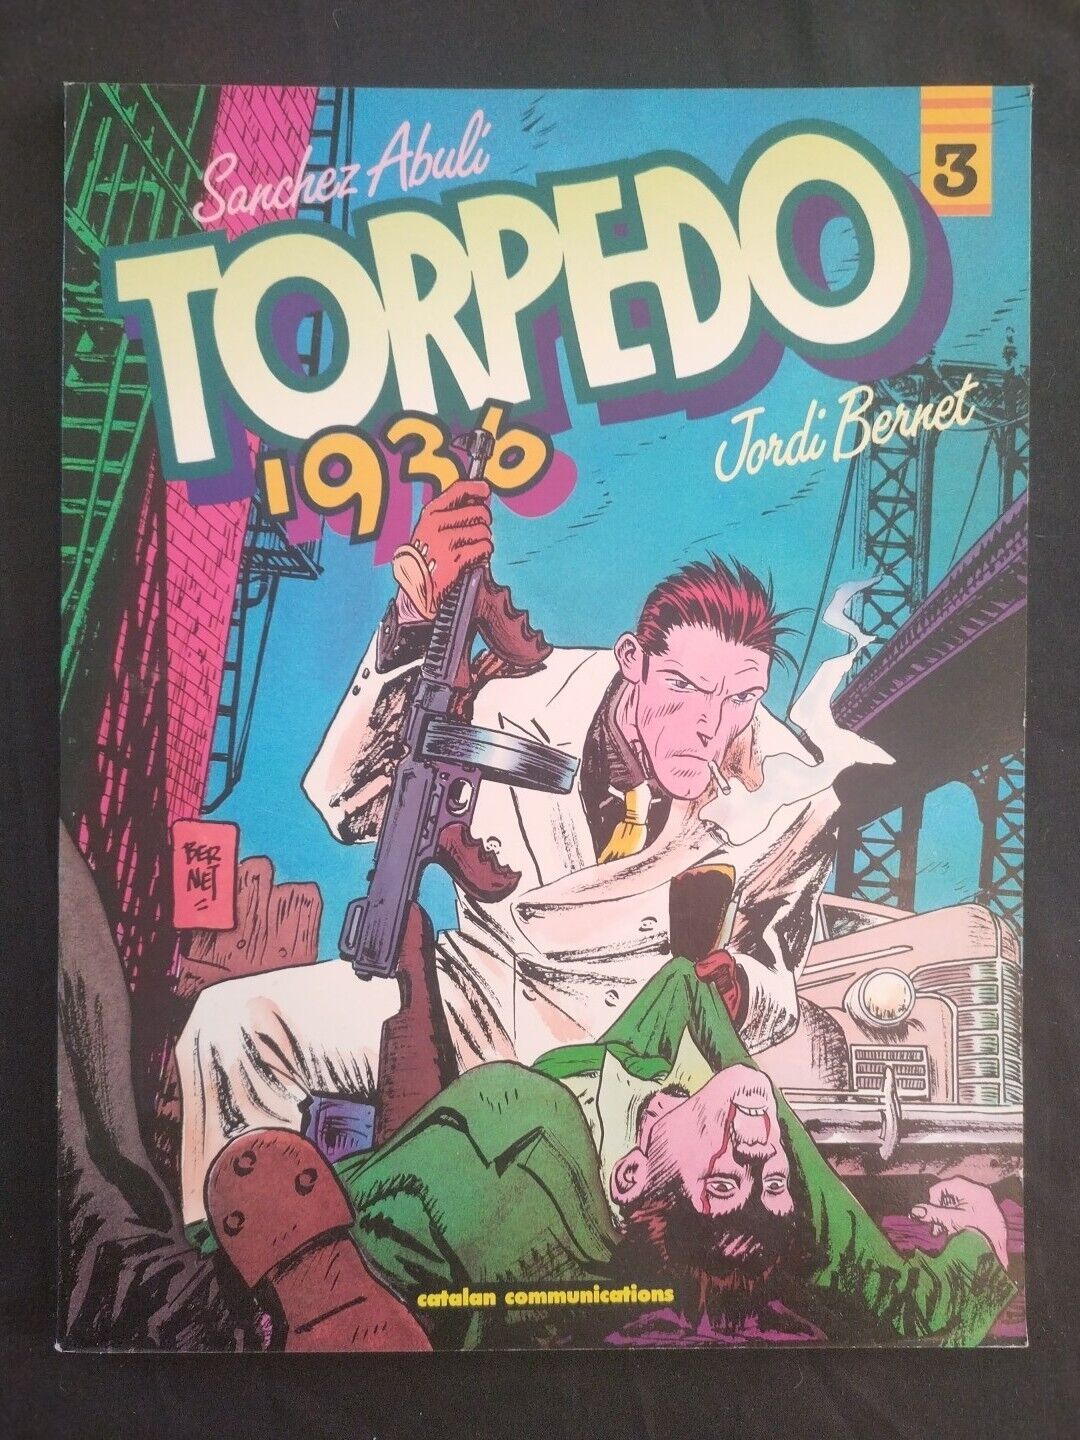 Torpedo 1936 Volume 3 (1986) 1st Printing Catalan Communications TPB